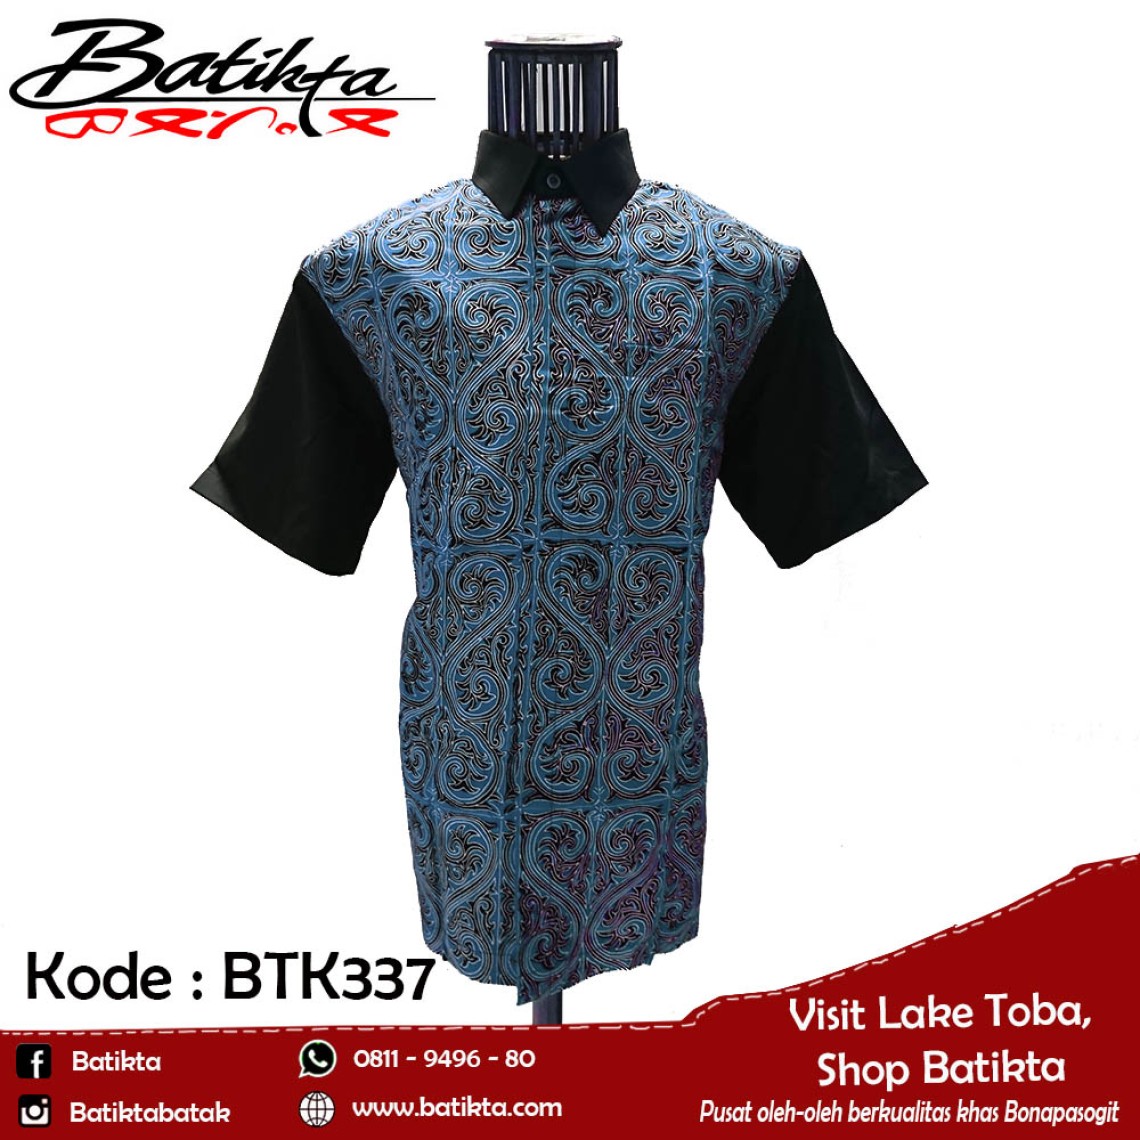 BTK337 HEM Batik Motif Gorga Warna Biru Putih Hitam profile picture